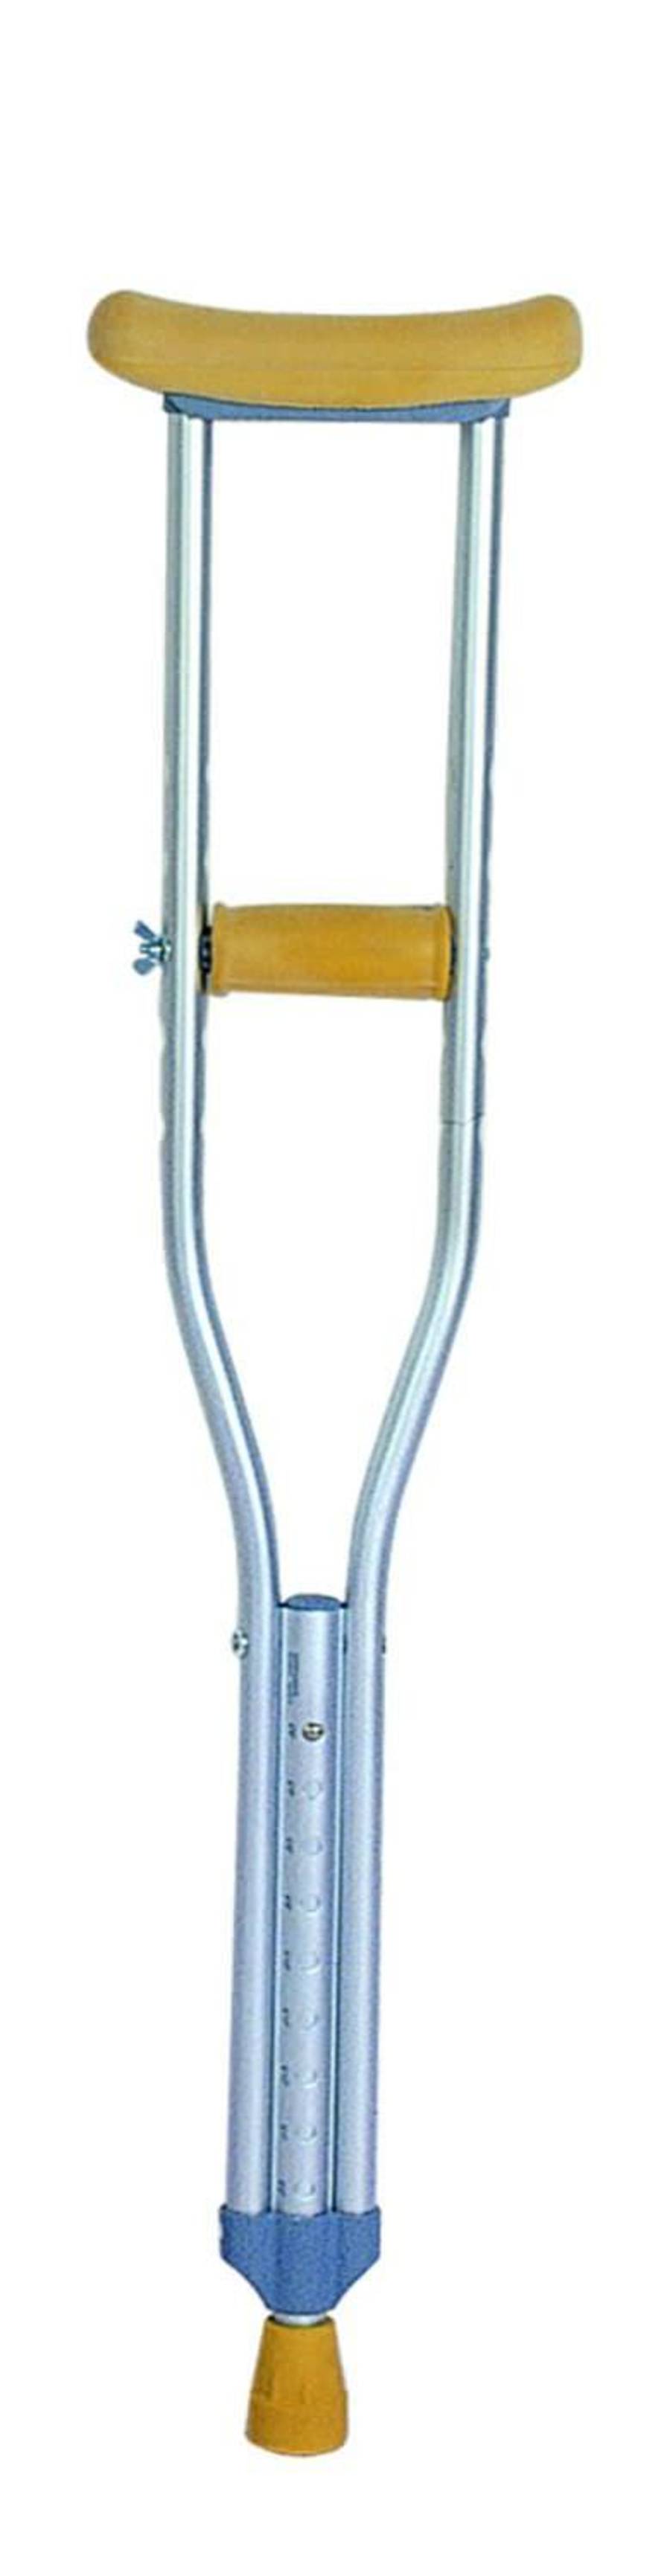 Axillary crutch / height-adjustable BT709 Better Medical Technology